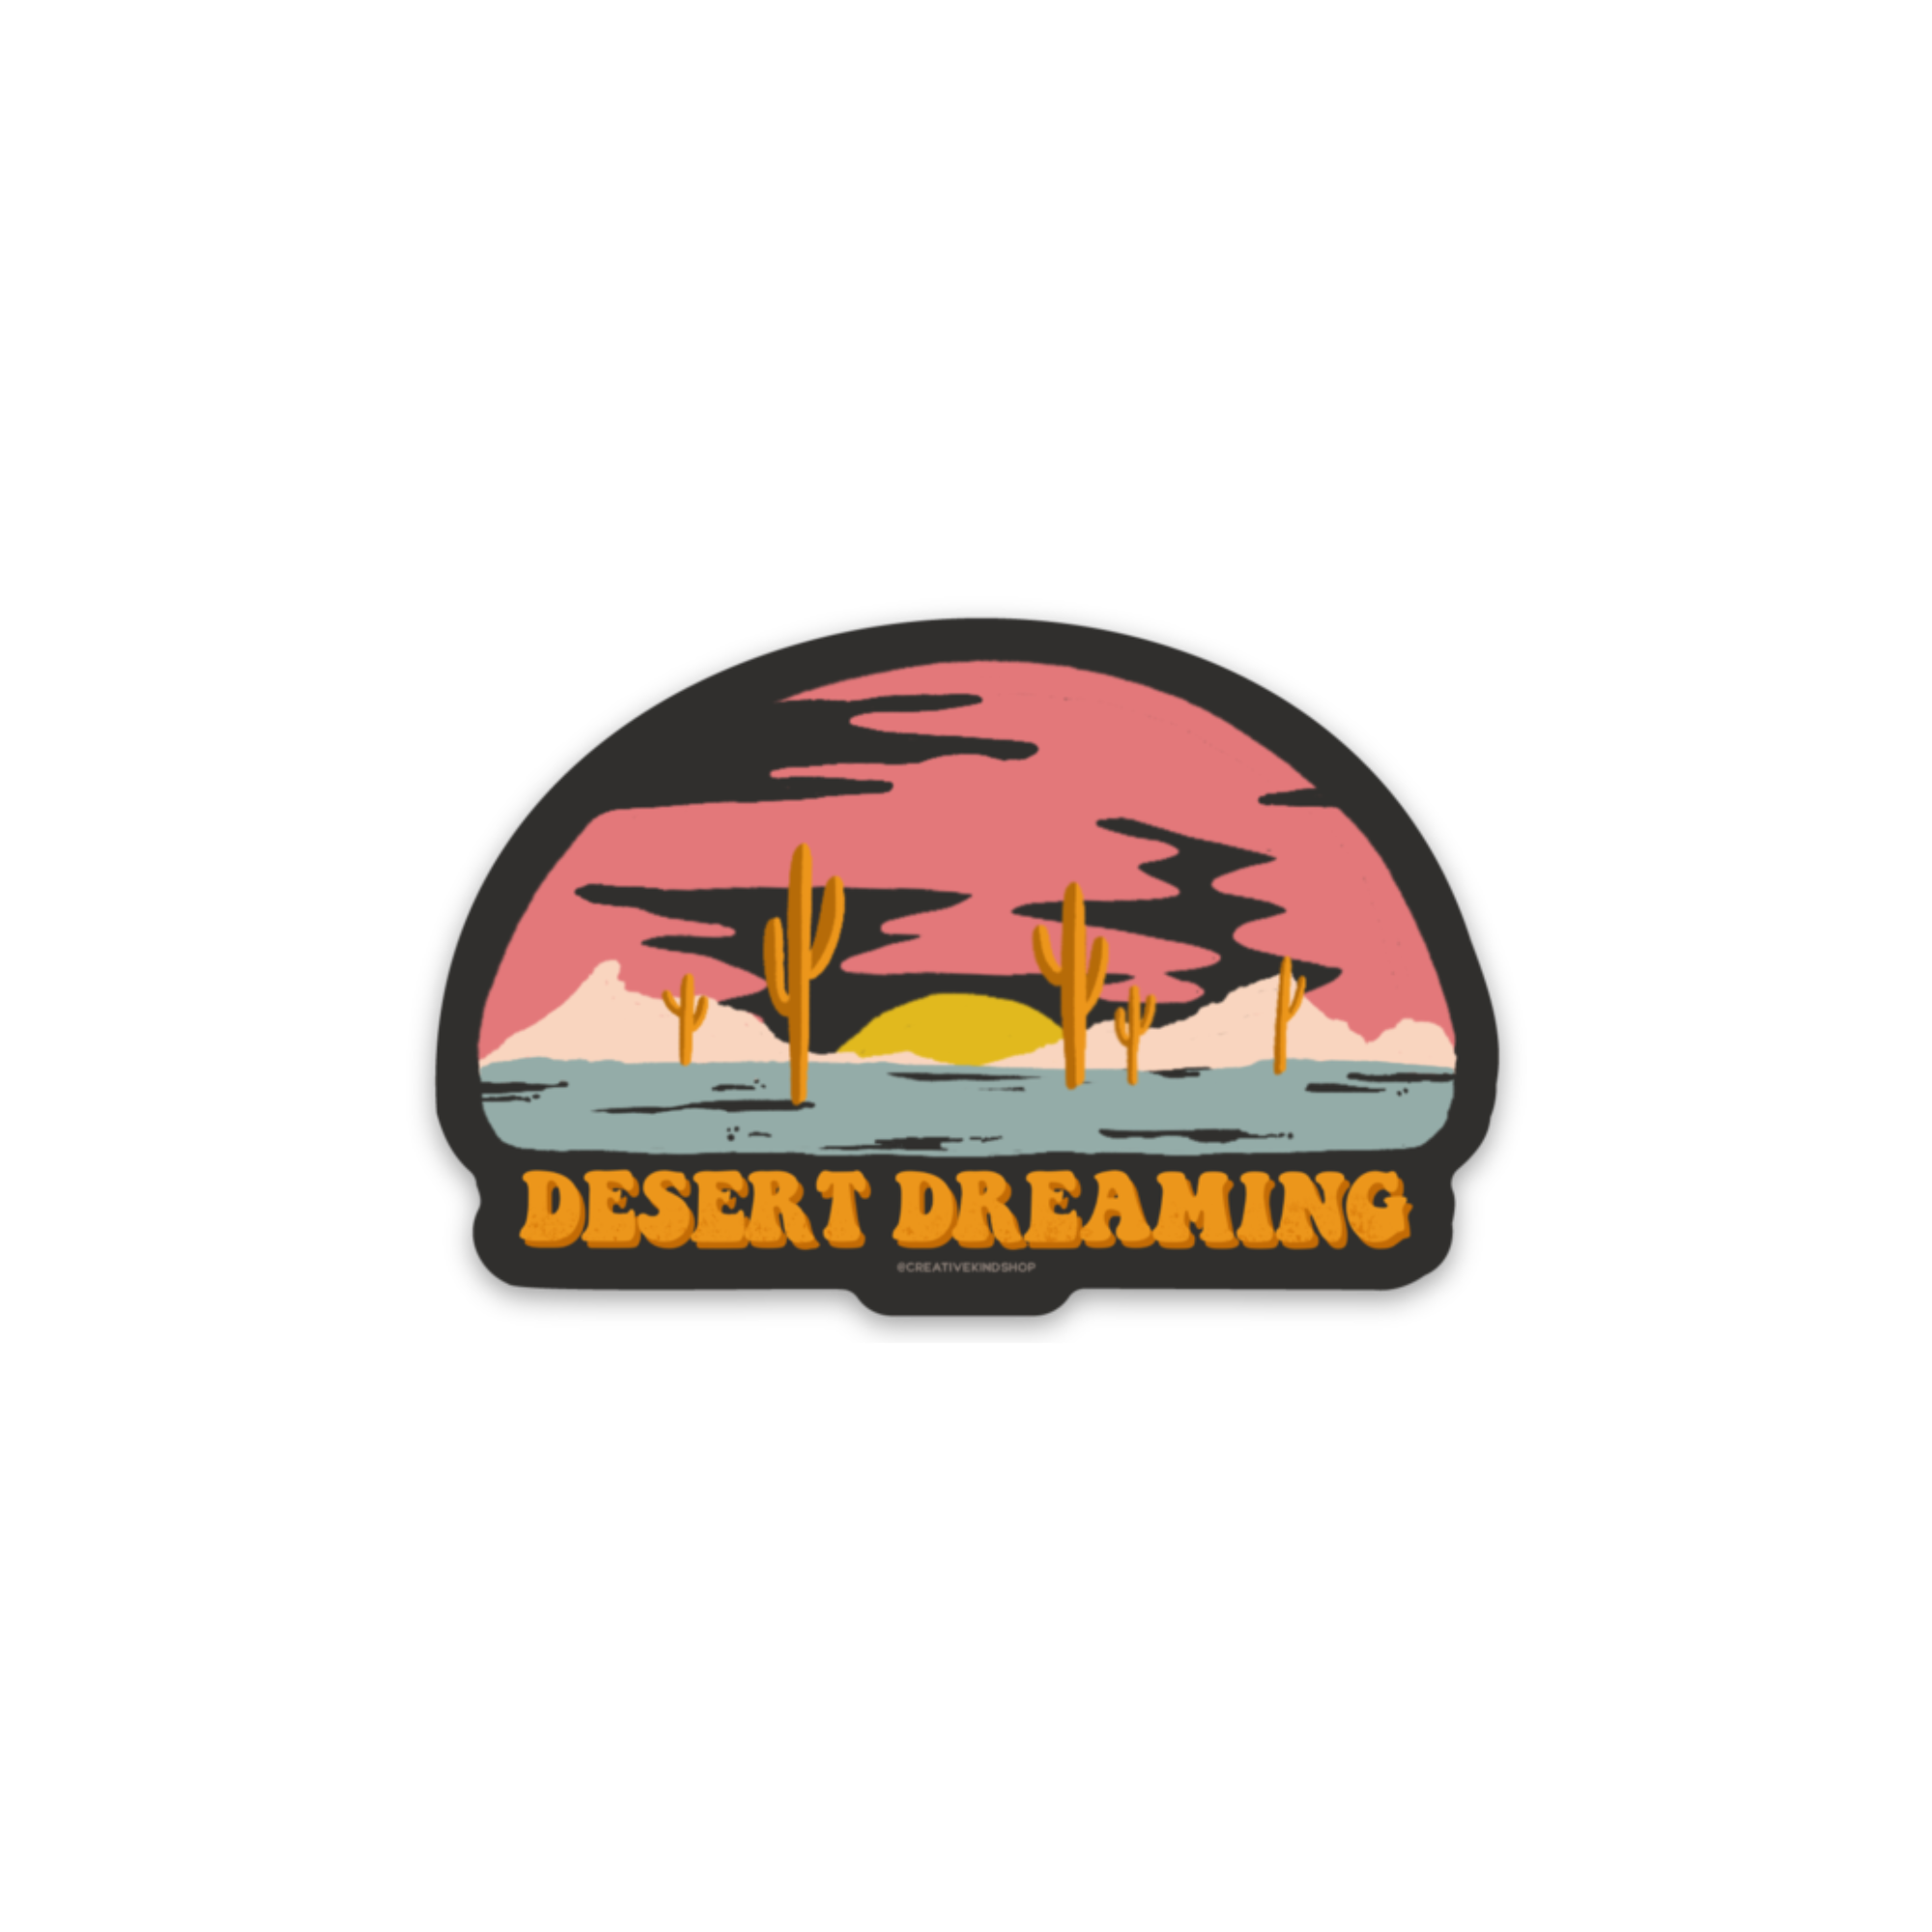 Black die cut sticker with desert sunset above the words "desert dreaming"